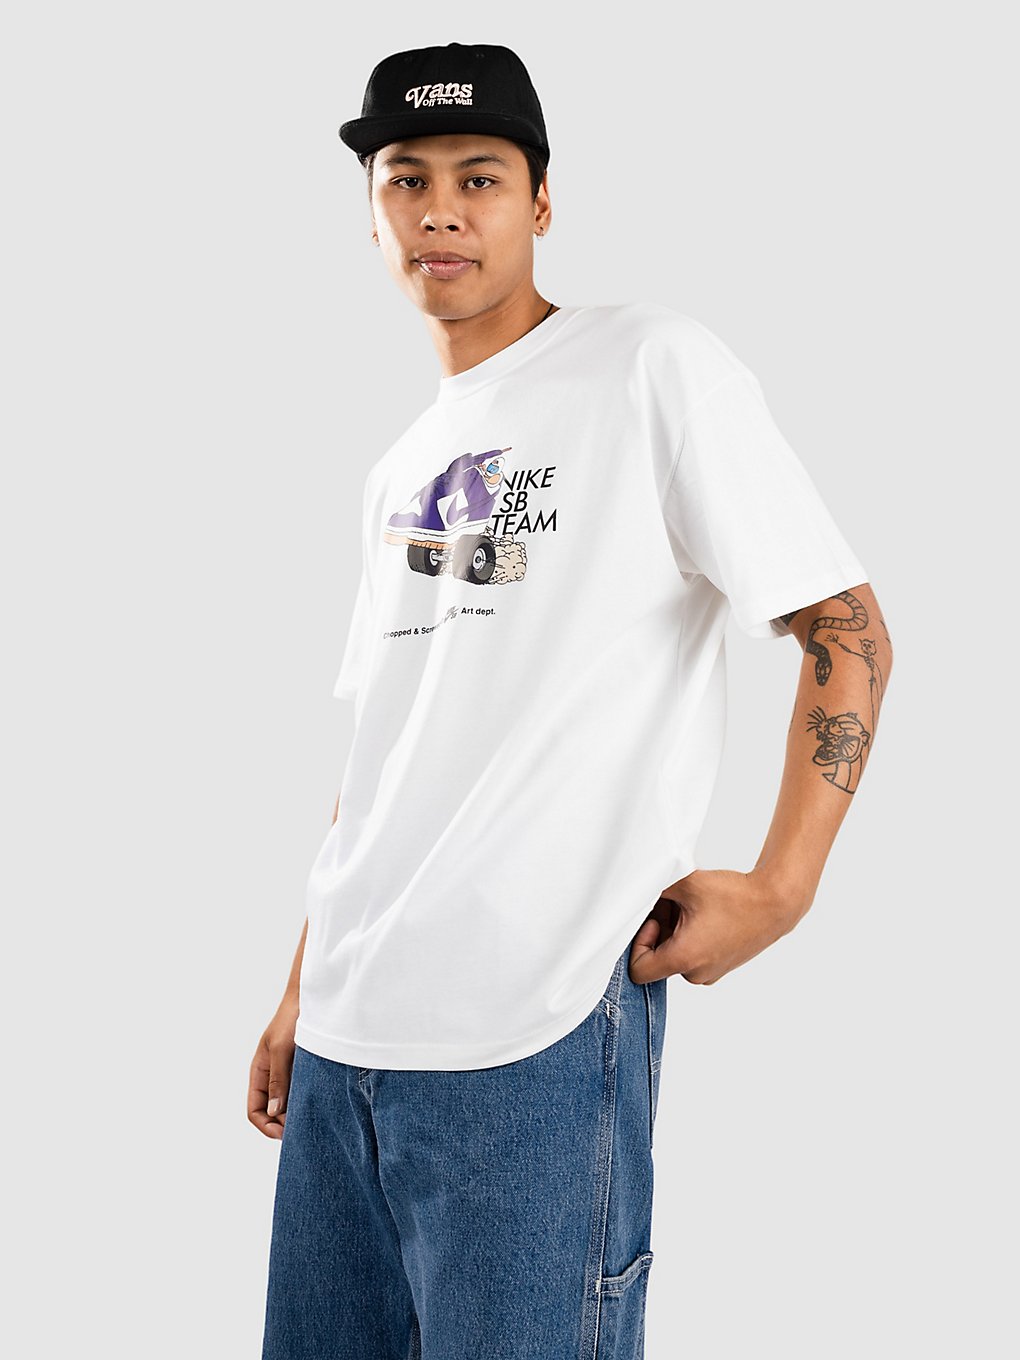 Nike Sb Dunkteam T-Shirt white kaufen